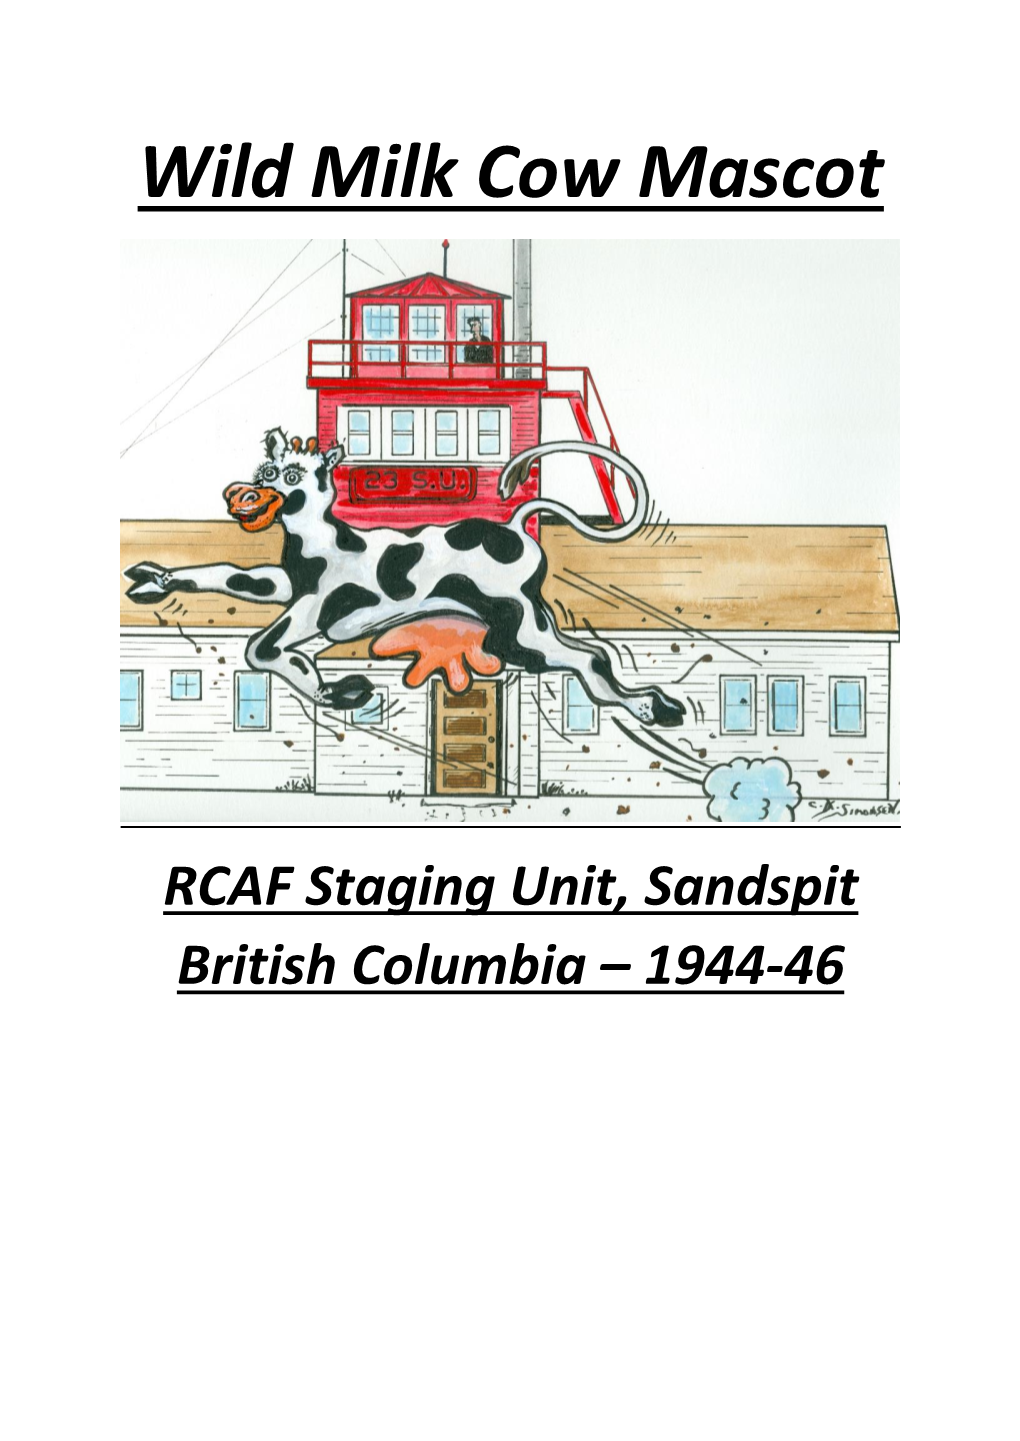 RCAF Station Sandspit British Columbia